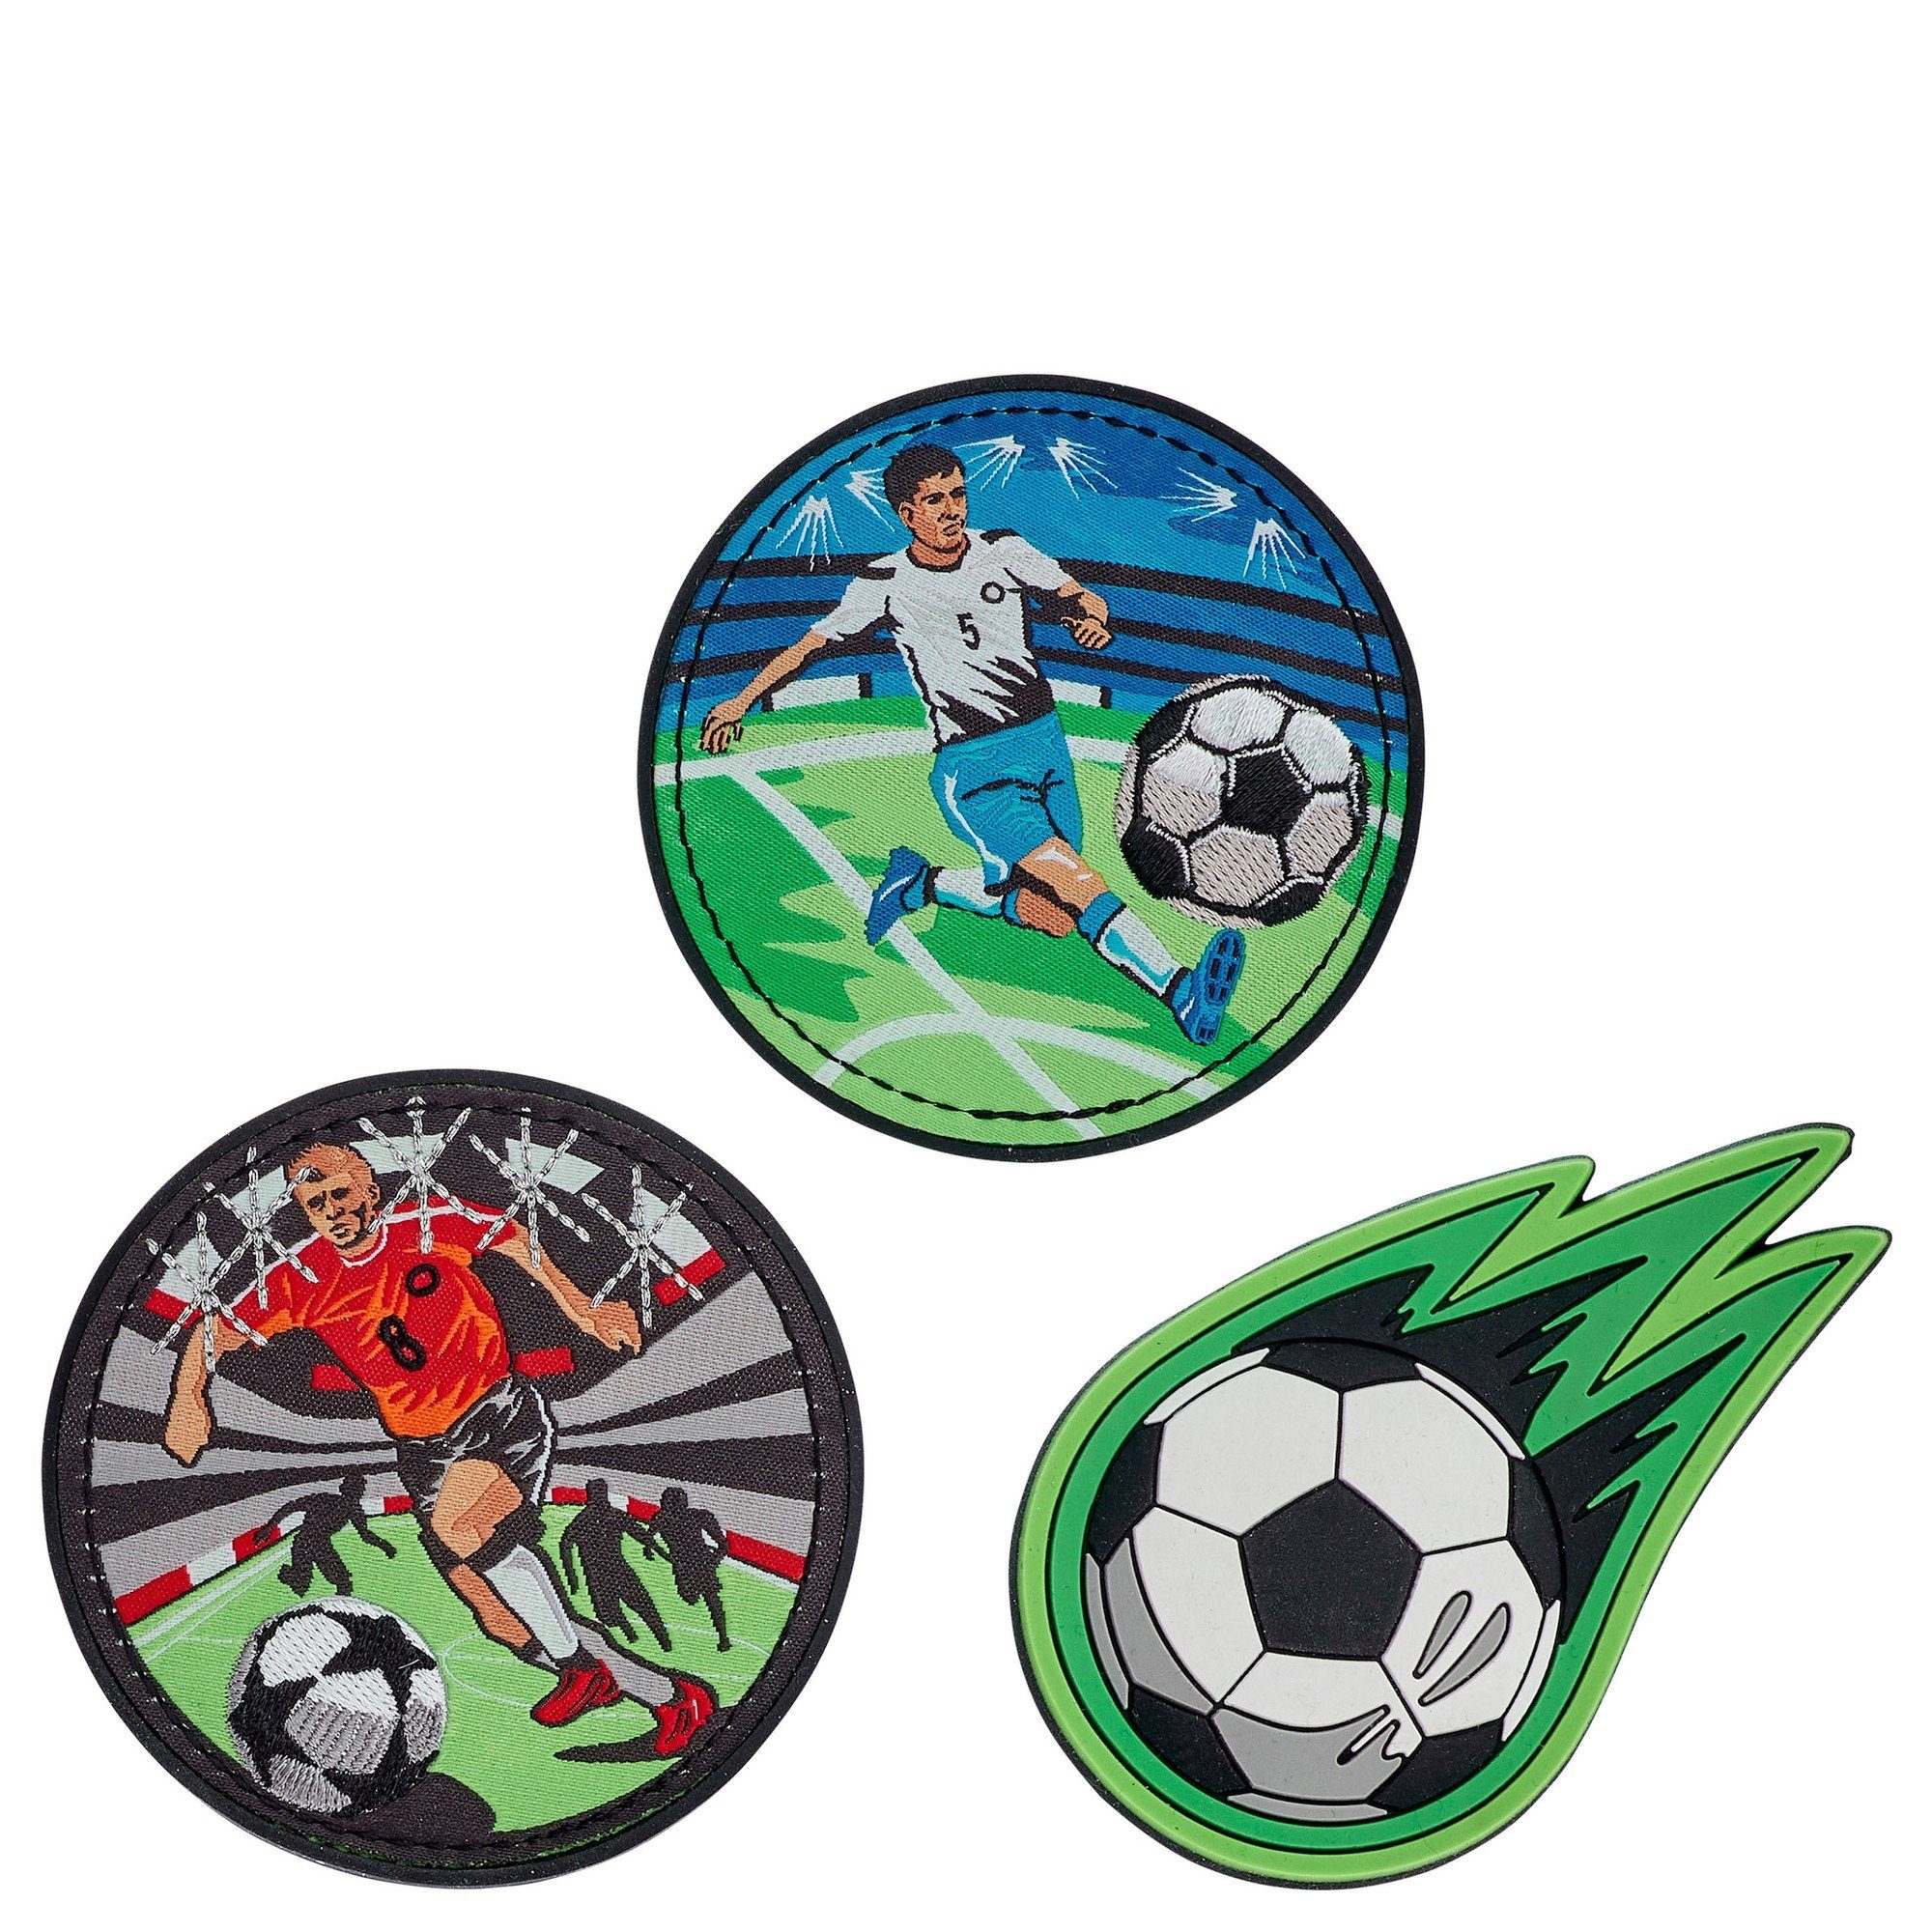 Green Ergoflex- DerDieDas® Schulranzen Set 5tlg. Soccer Schulranzen